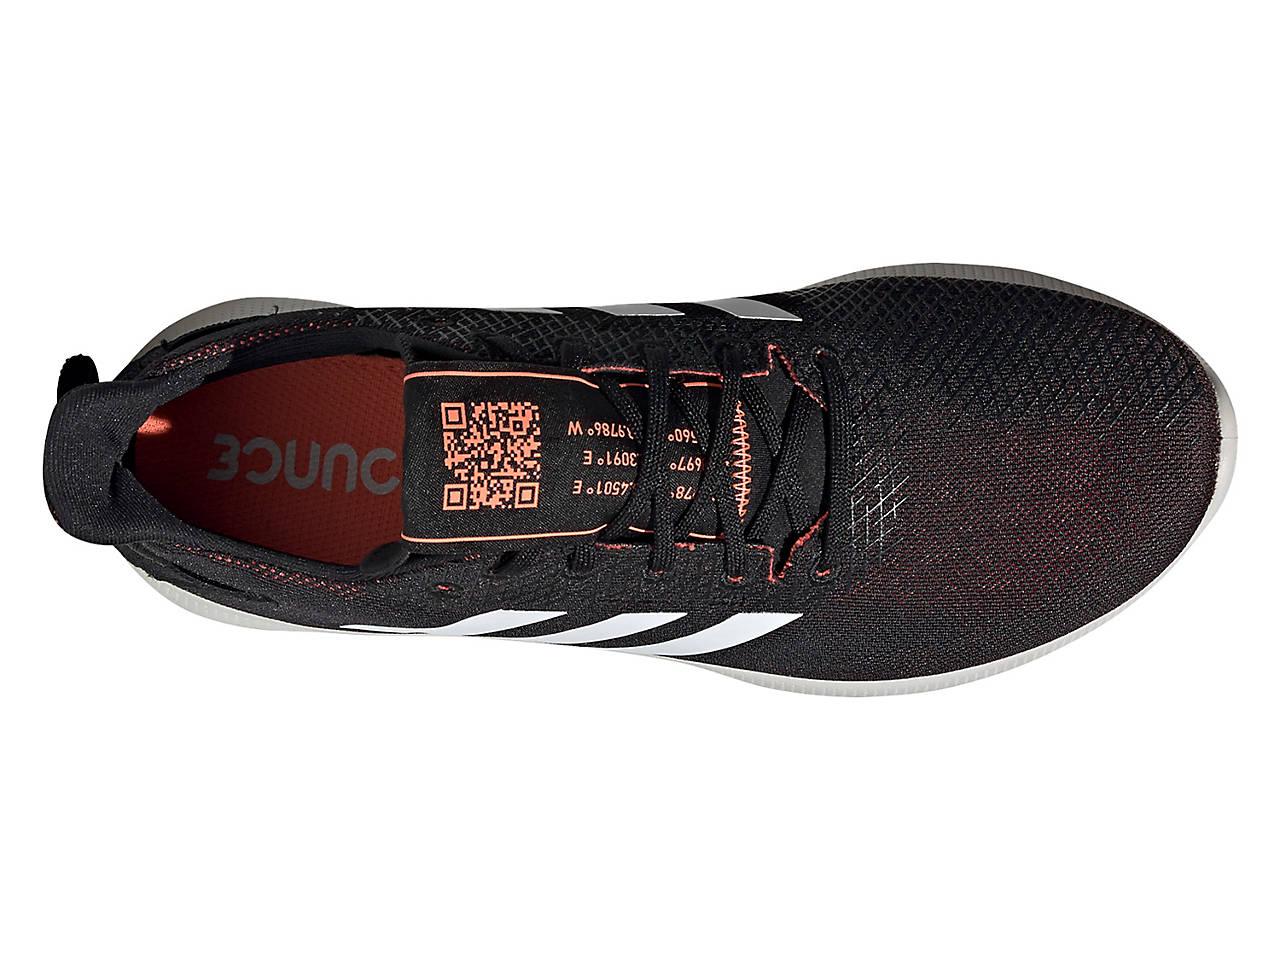 adidas Sensebounce+ Street Running Shoe in Black/White/Orange (Black) for  Men - Save 59% | Lyst